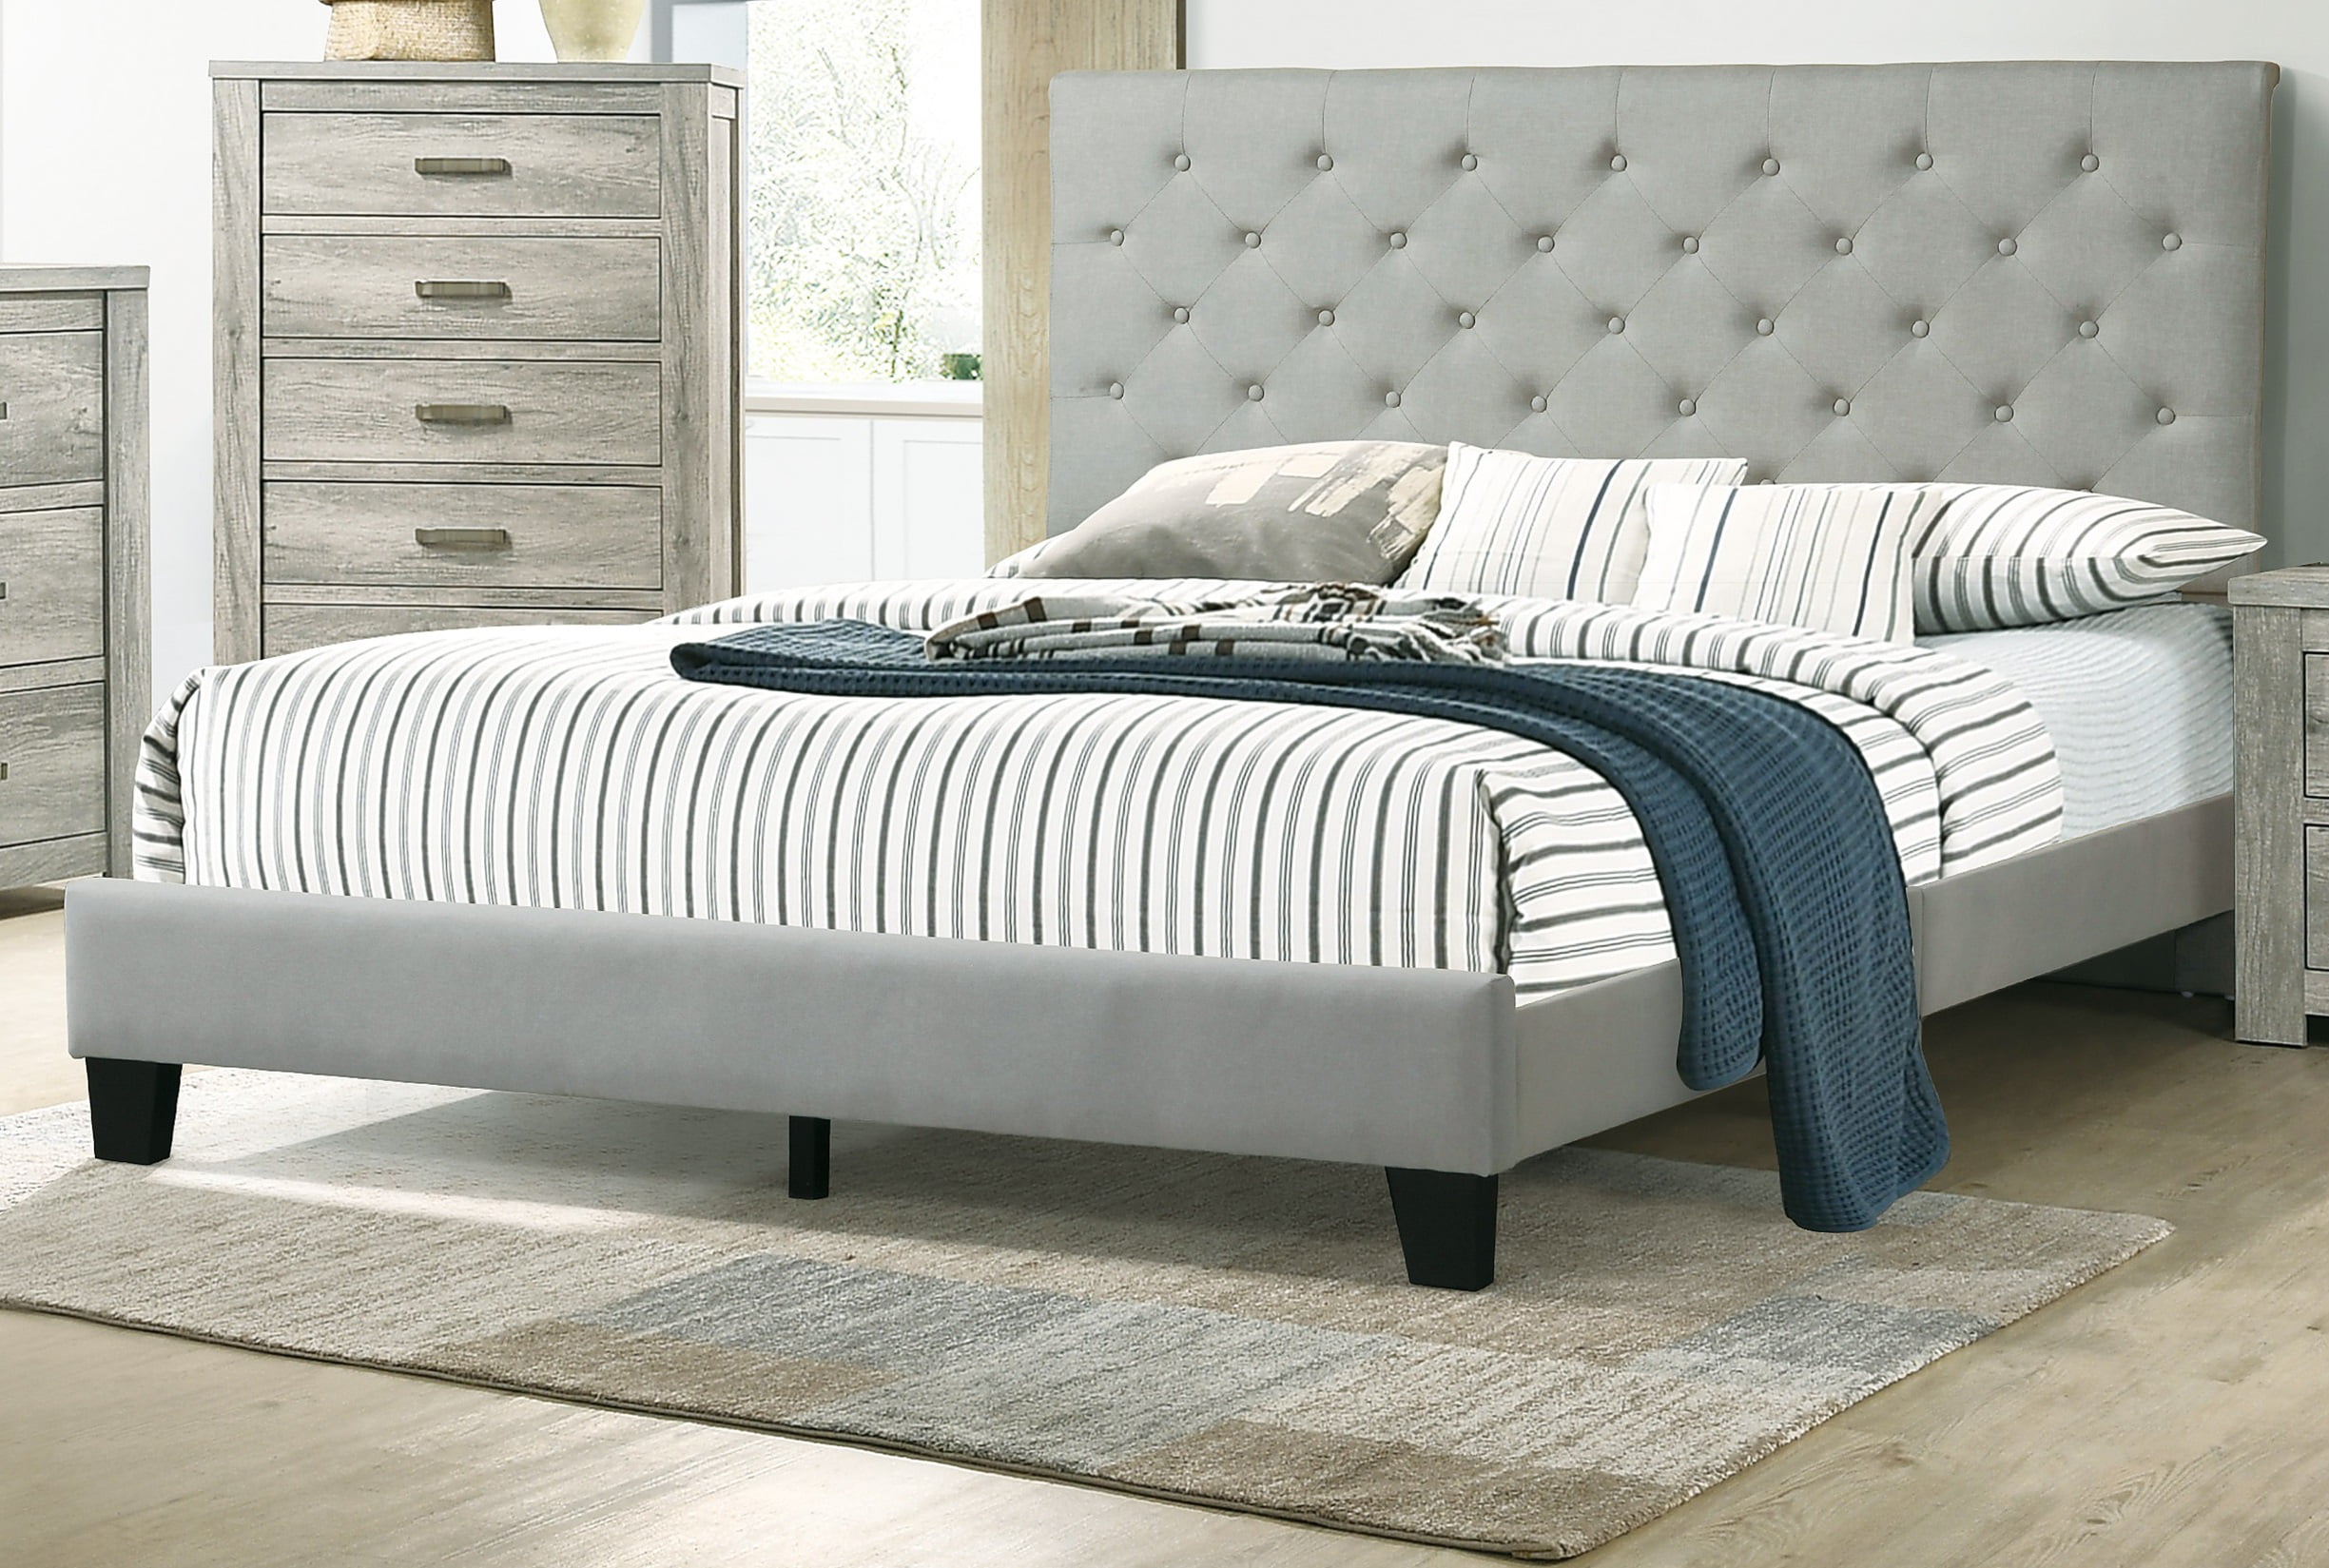 Eastern King Size Bed 1pc Set Gray, White Bedroom Furniture King Size Bed Frame